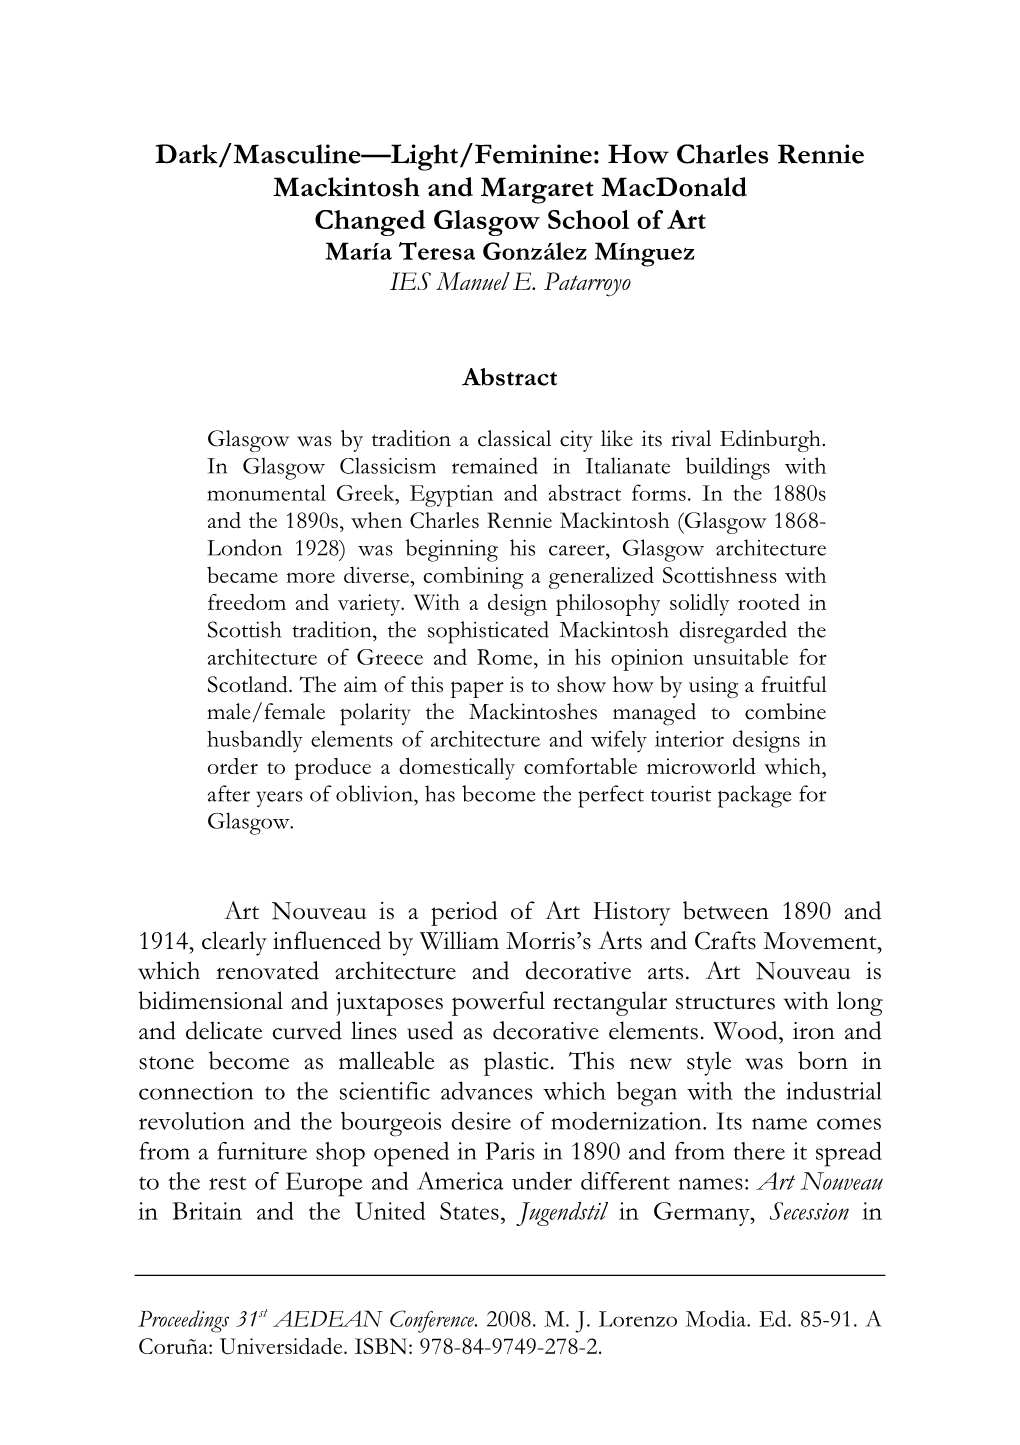 How Charles Rennie Mackintosh and Margaret Macdonald Changed Glasgow School of Art María Teresa González Mínguez IES Manuel E